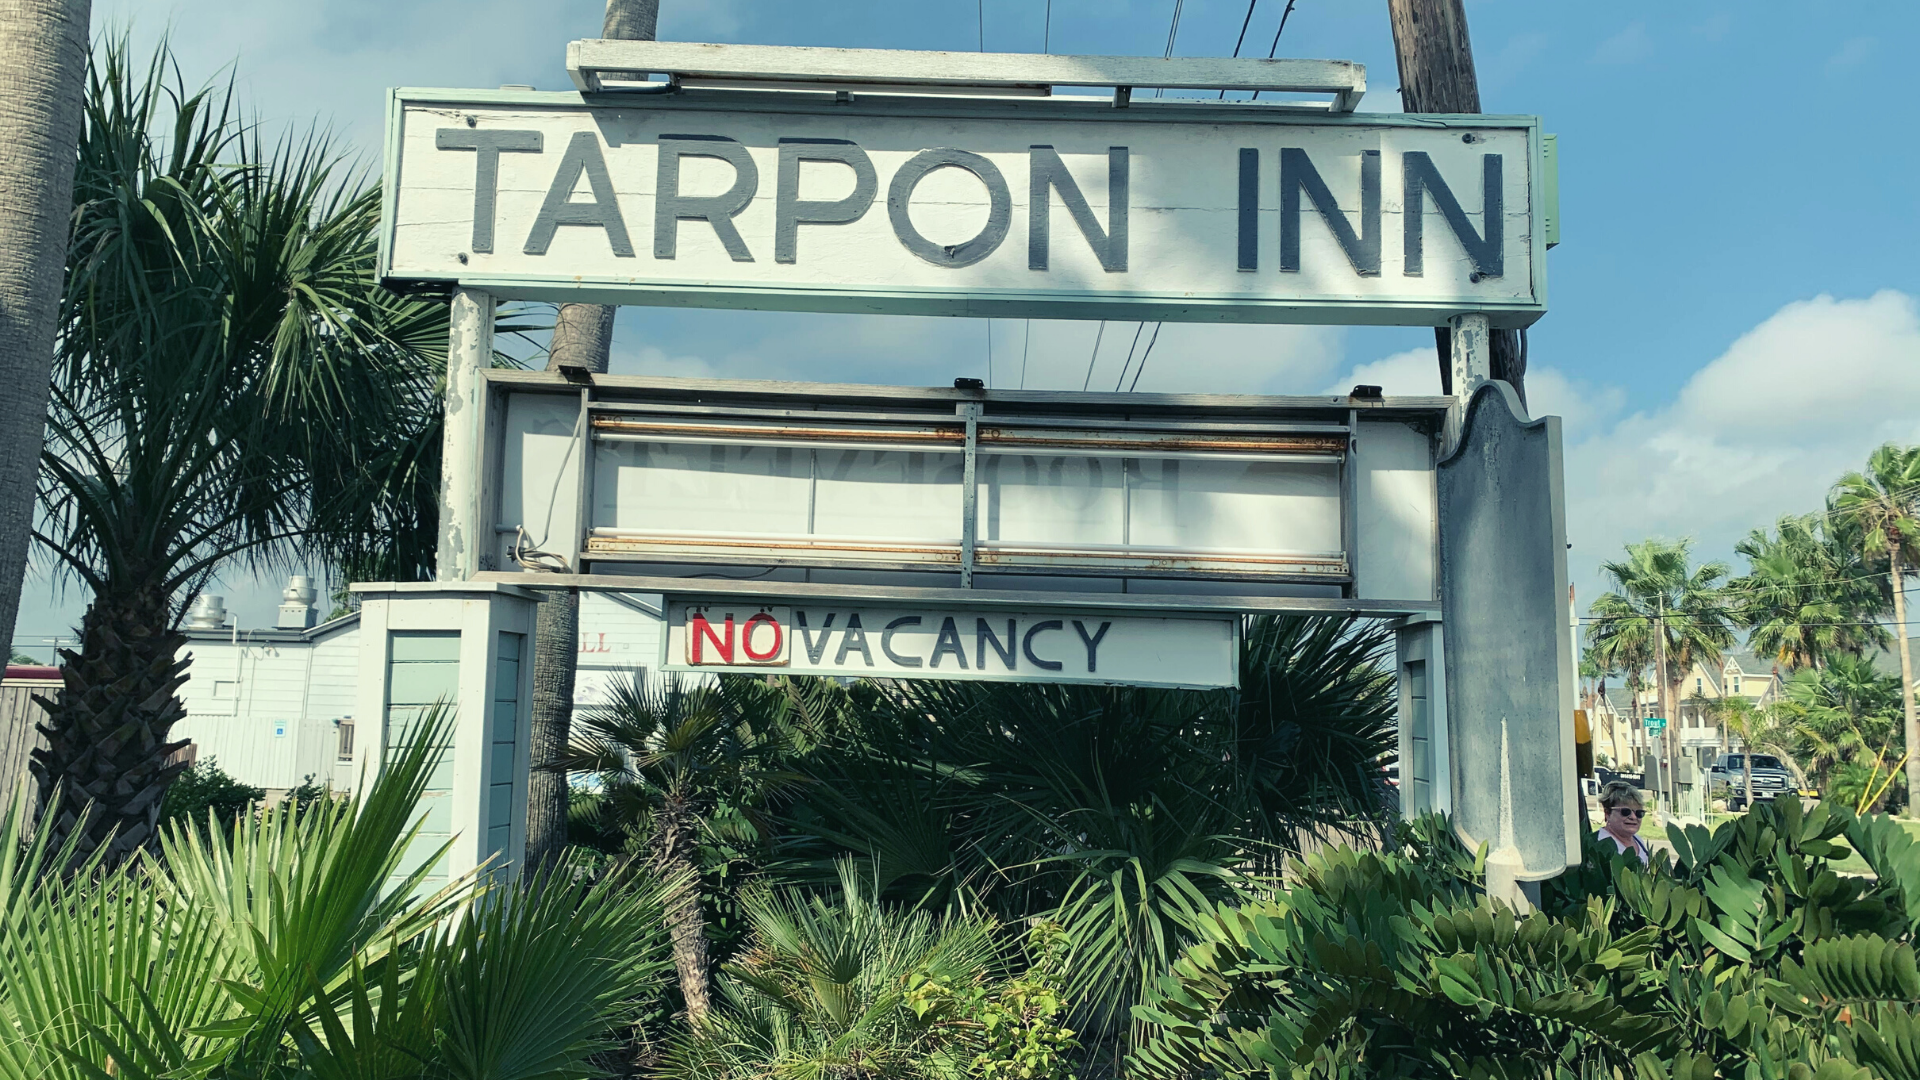 Photo of the Tarpon Inn sign